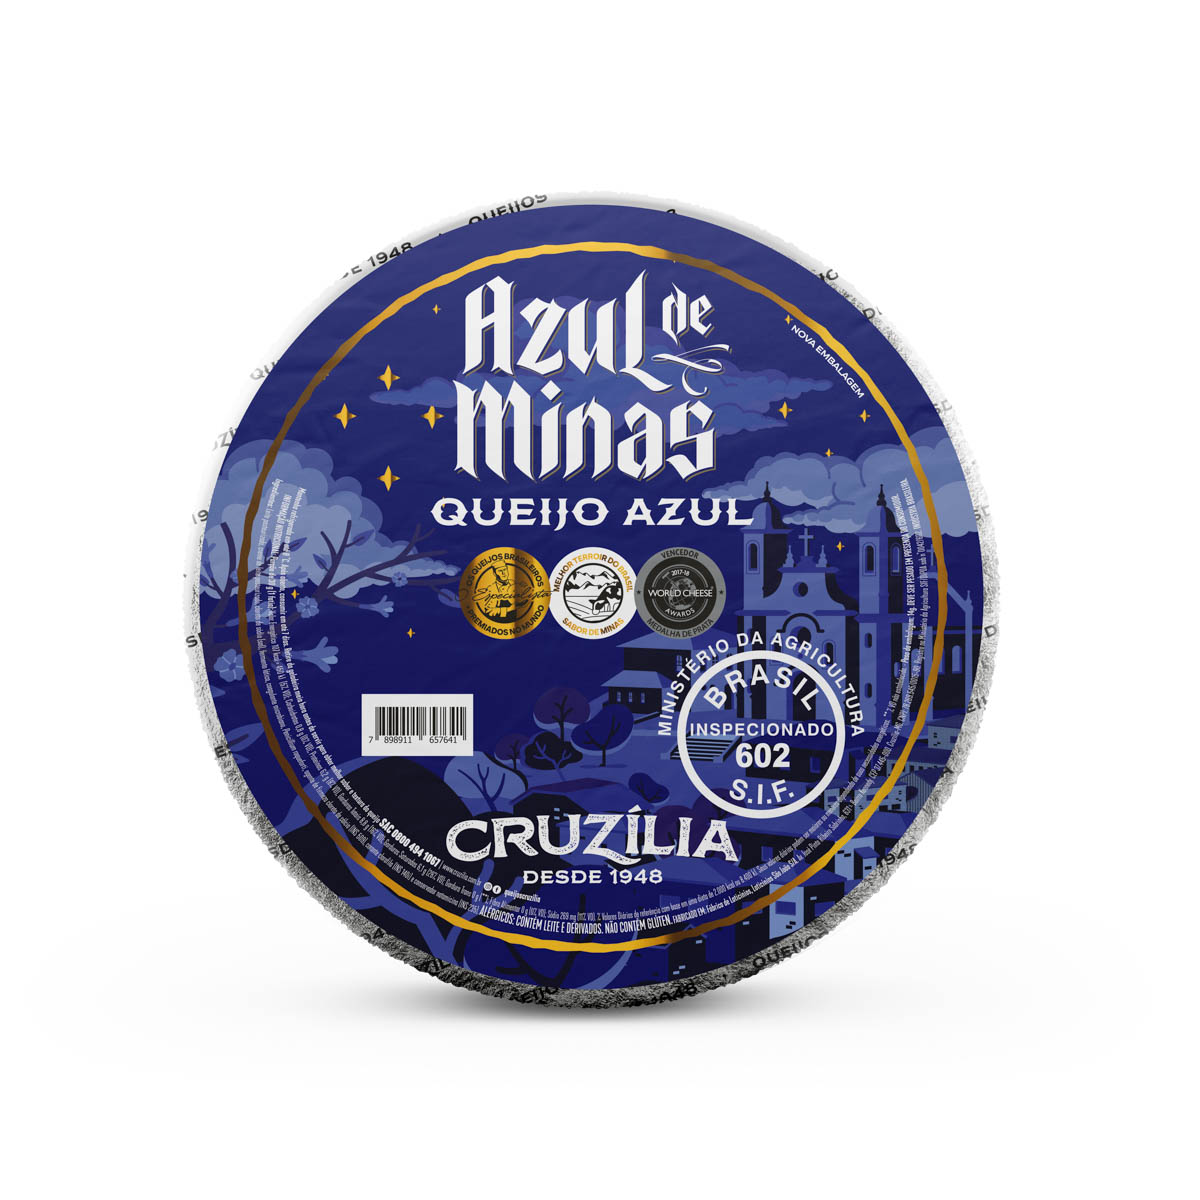 Queijo Gorgonzola Azul de Minas Cruzília